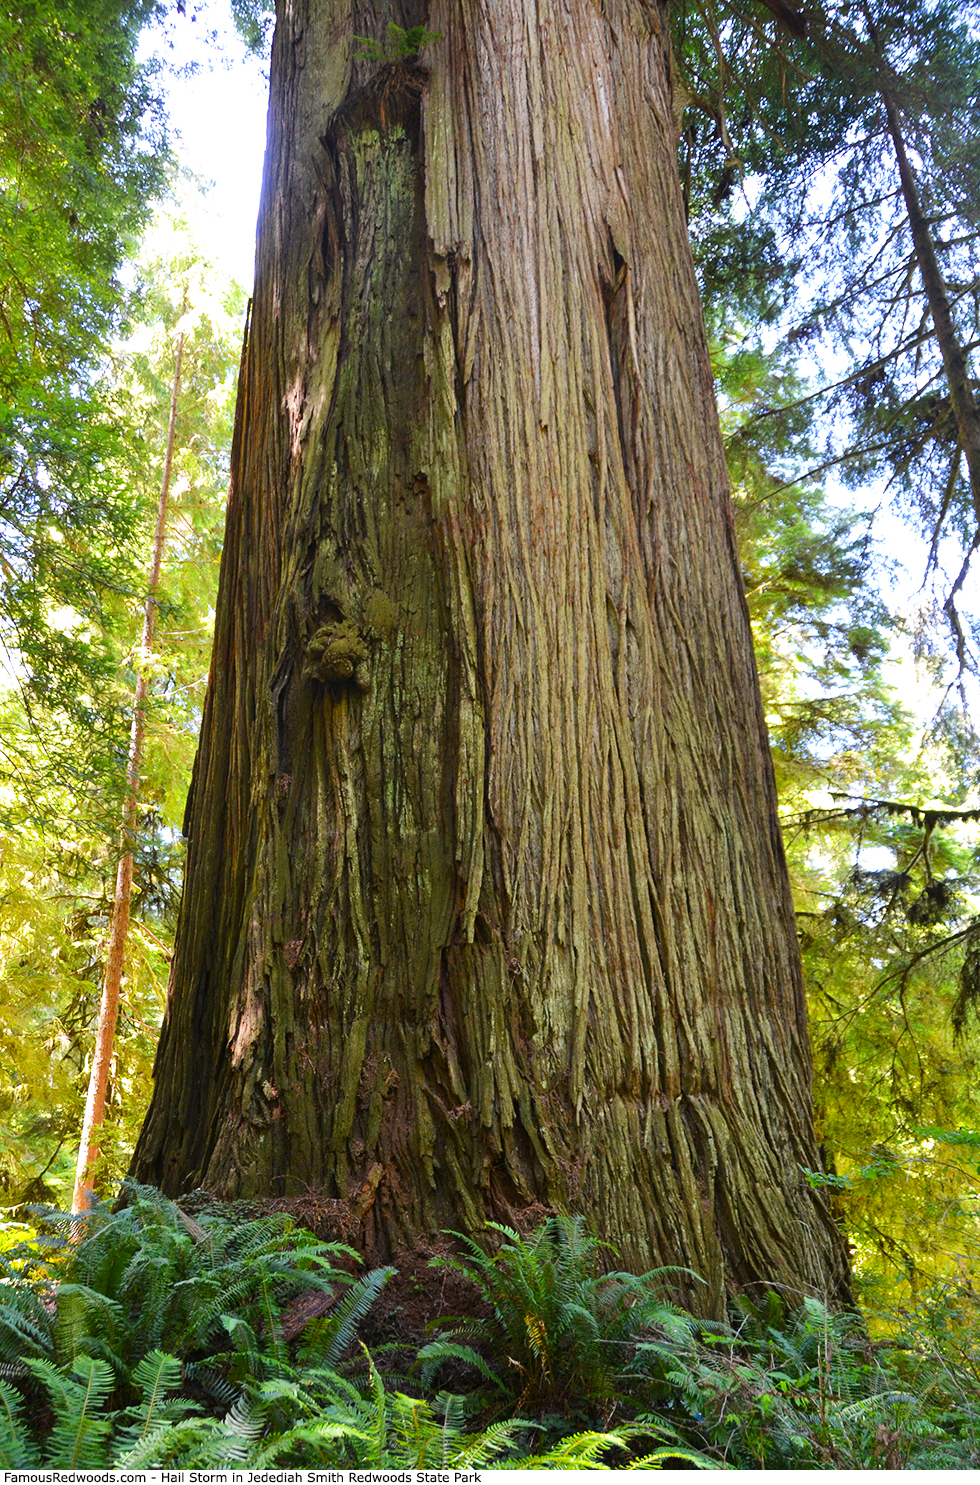 Jedediah Smith Redwoods State Park - Hail Storm Tree